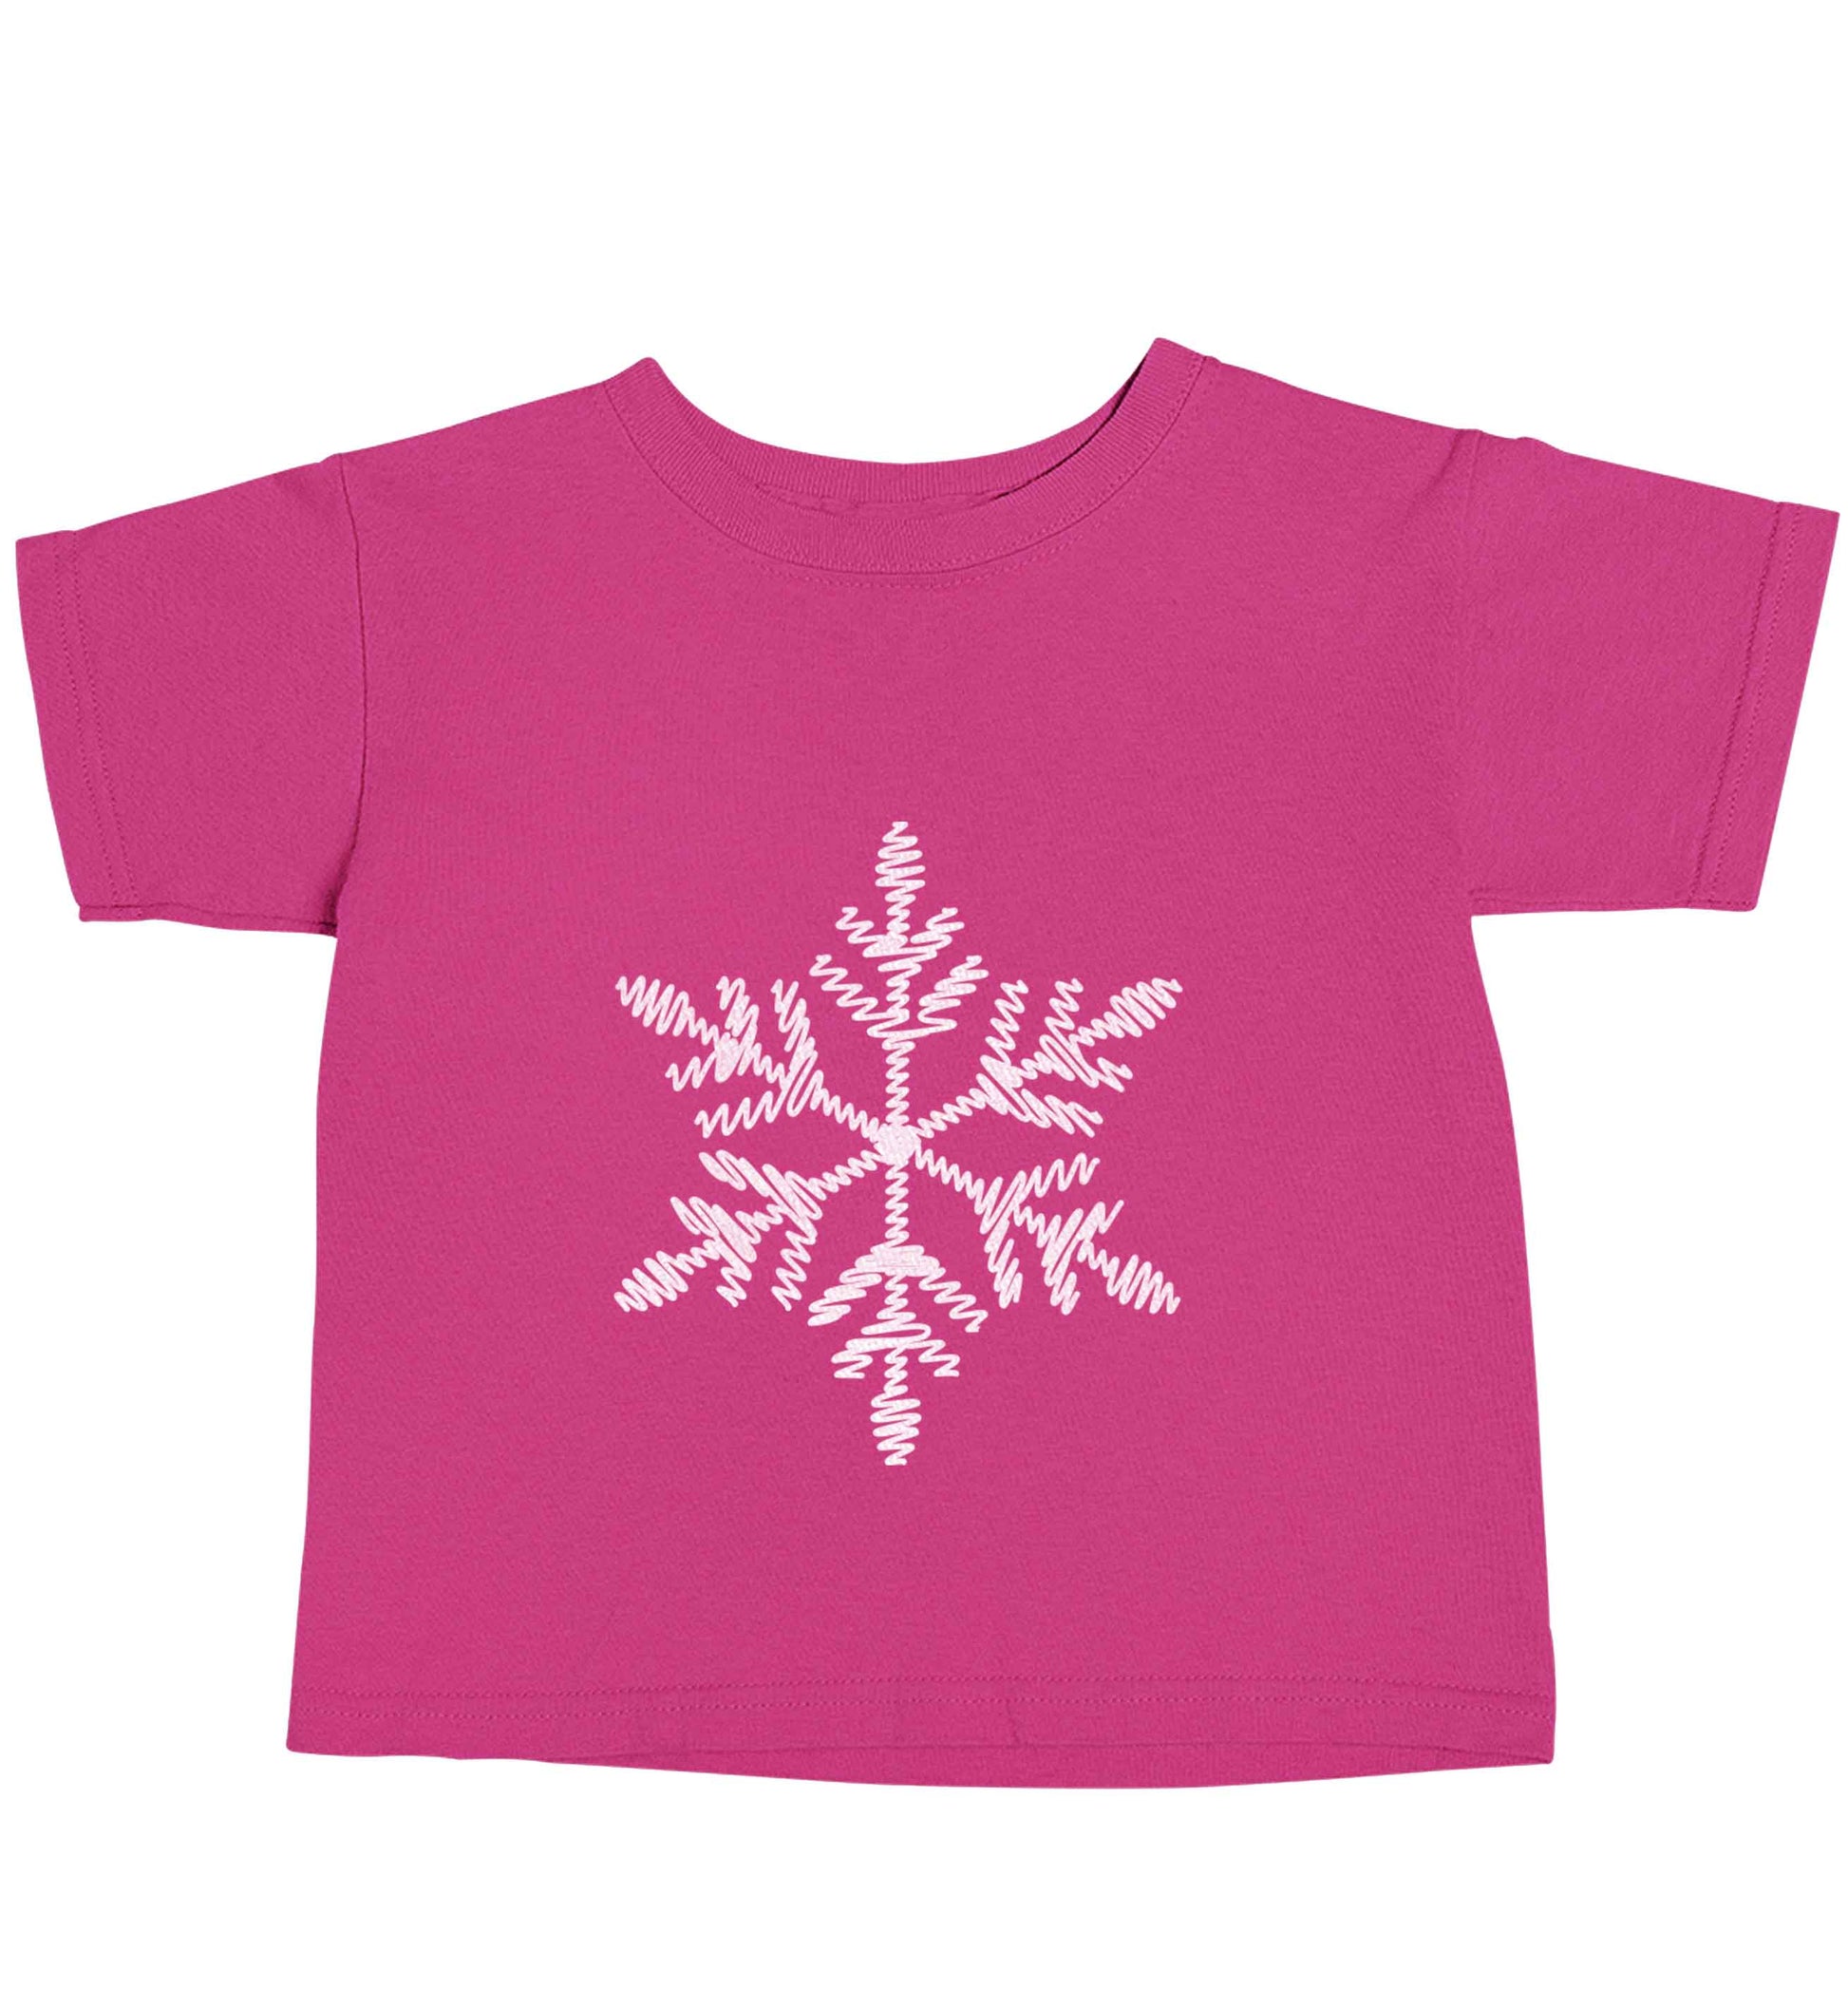 Snowflake pink baby toddler Tshirt 2 Years